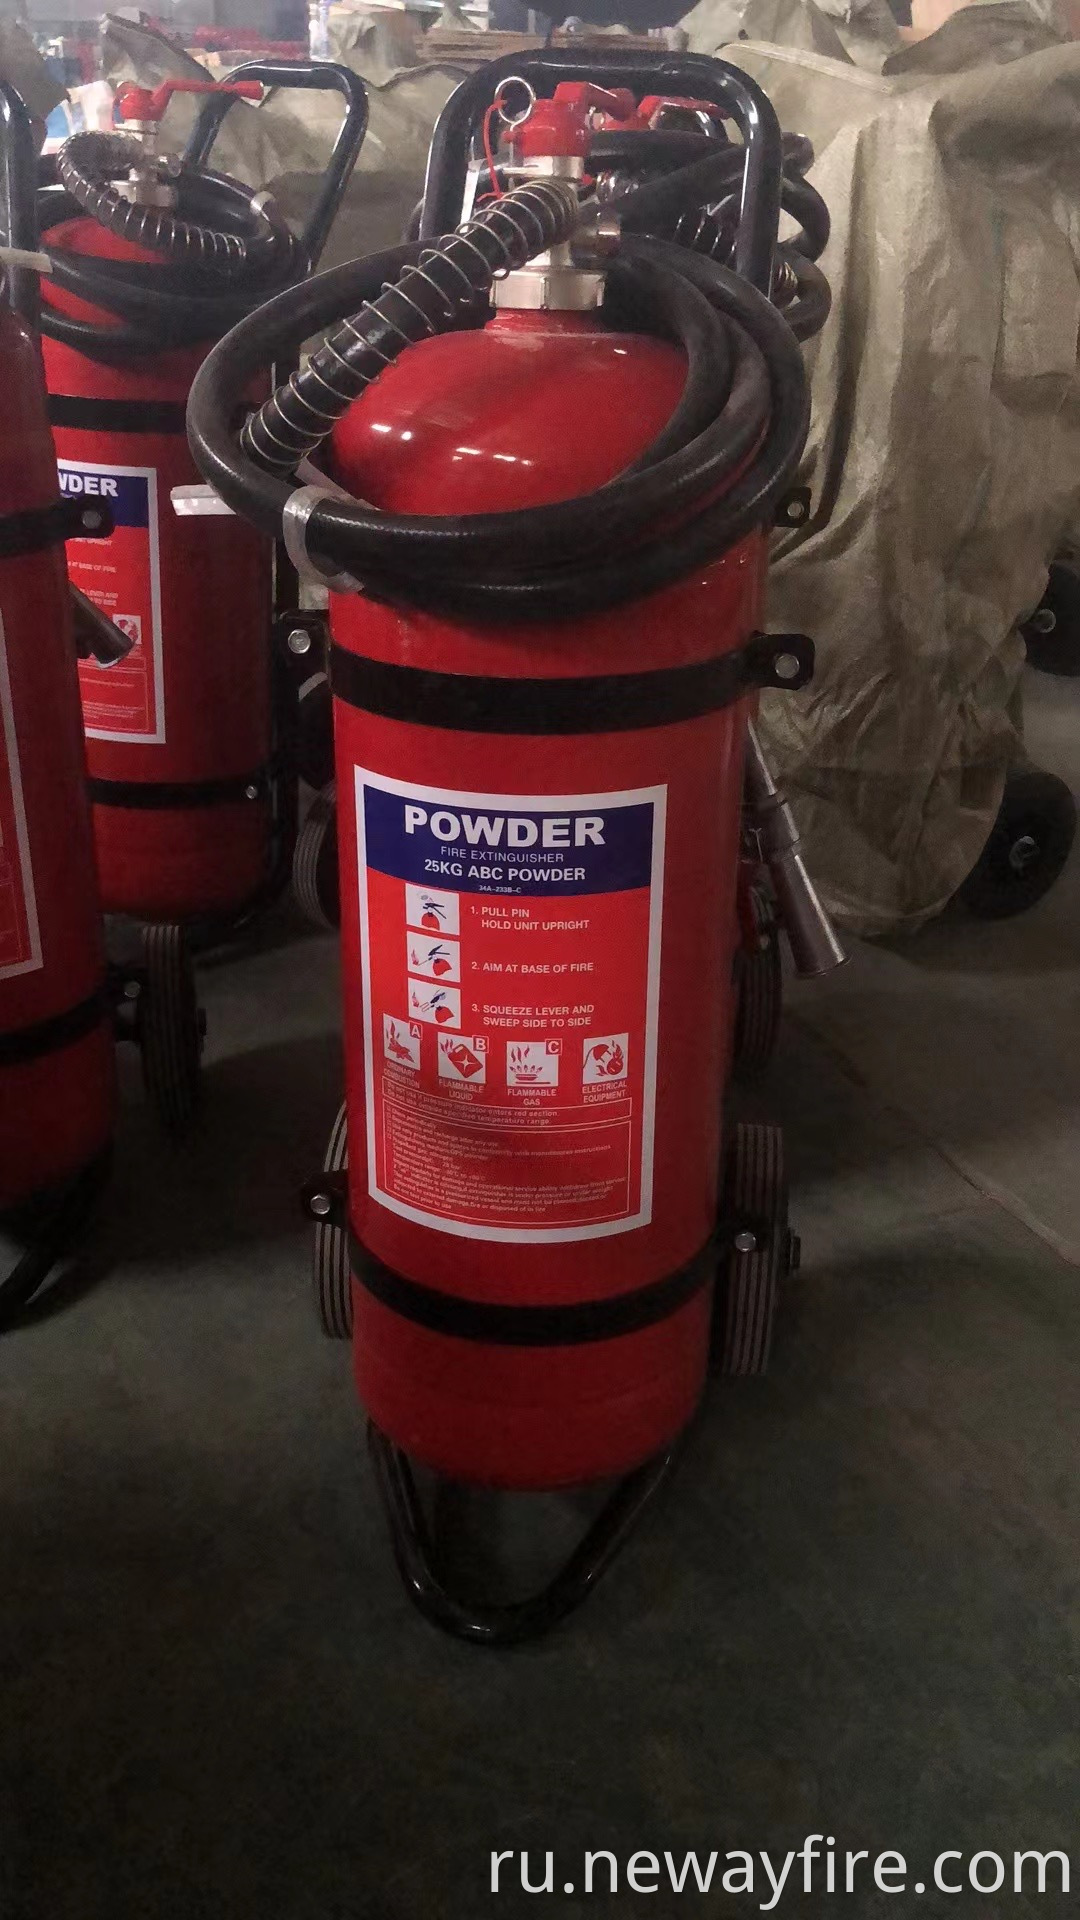 25Kg Wheeled dry powder fire extinguisher